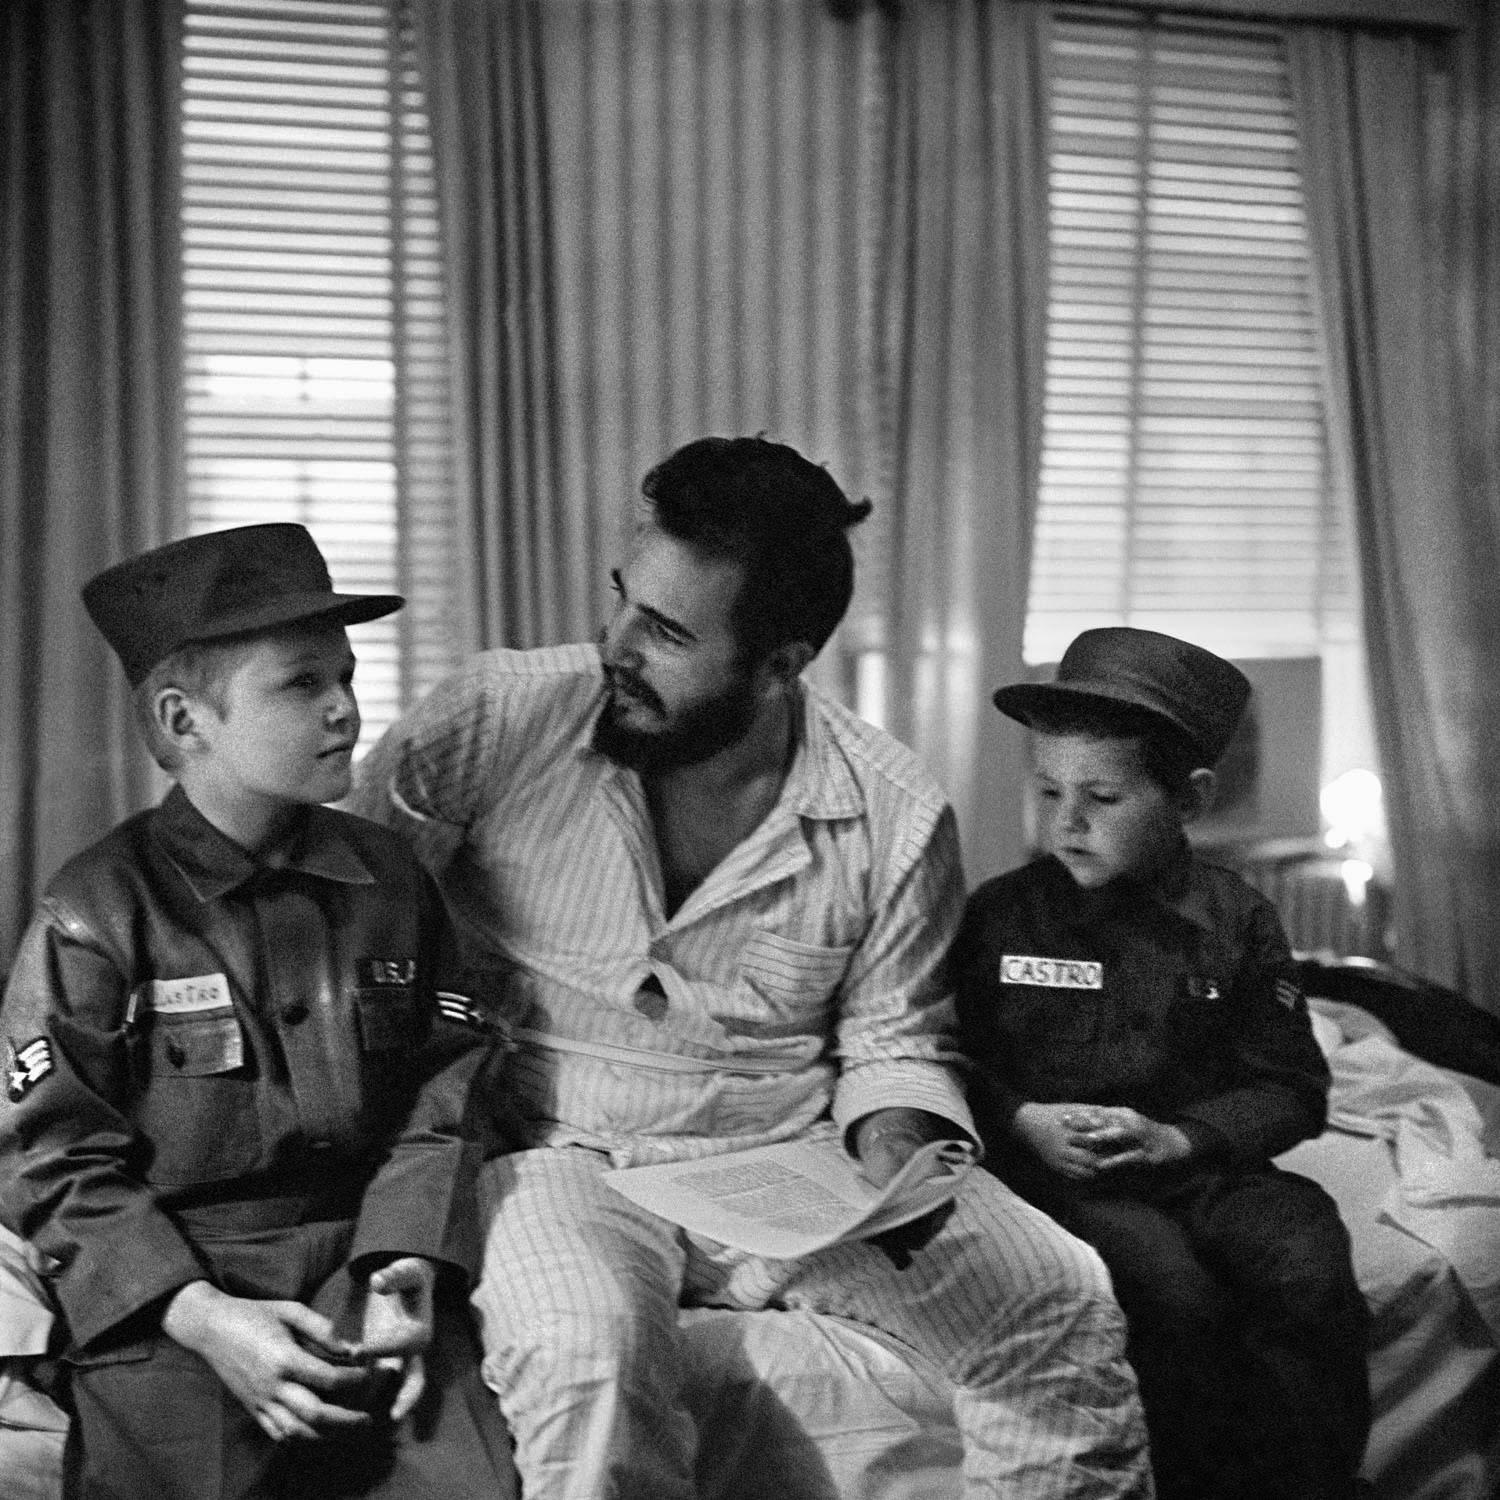 Alberto Korda Black and White Photograph - Fidel Castro with American children Jack and Jeff, whose surname is also Castro